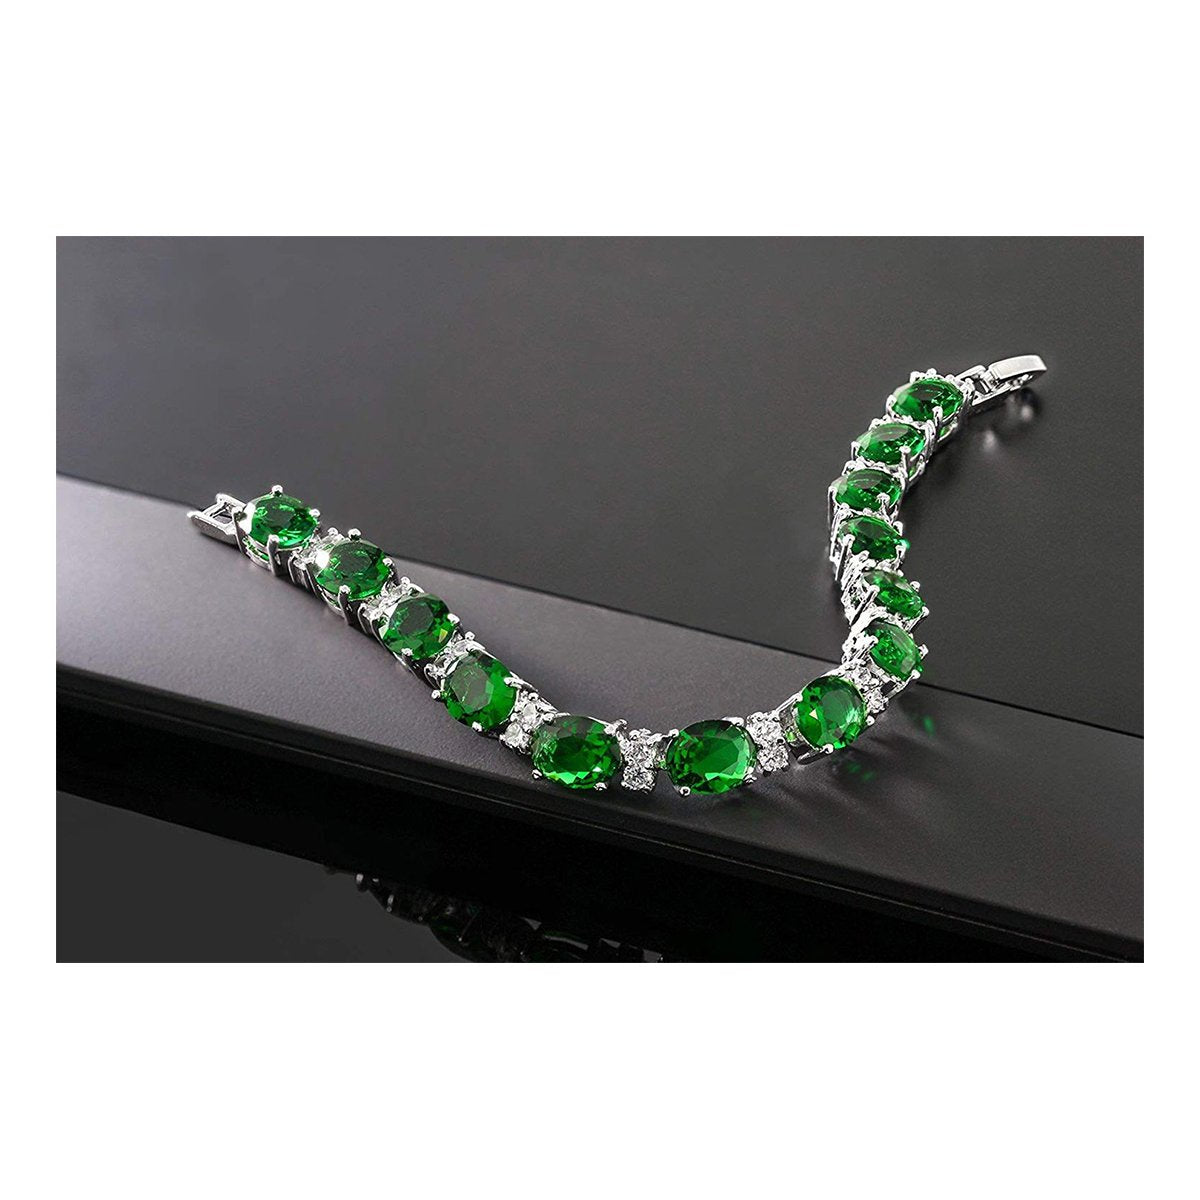 Tennis Emerald Green Cubic Zirconia American Diamond Bracelet Women